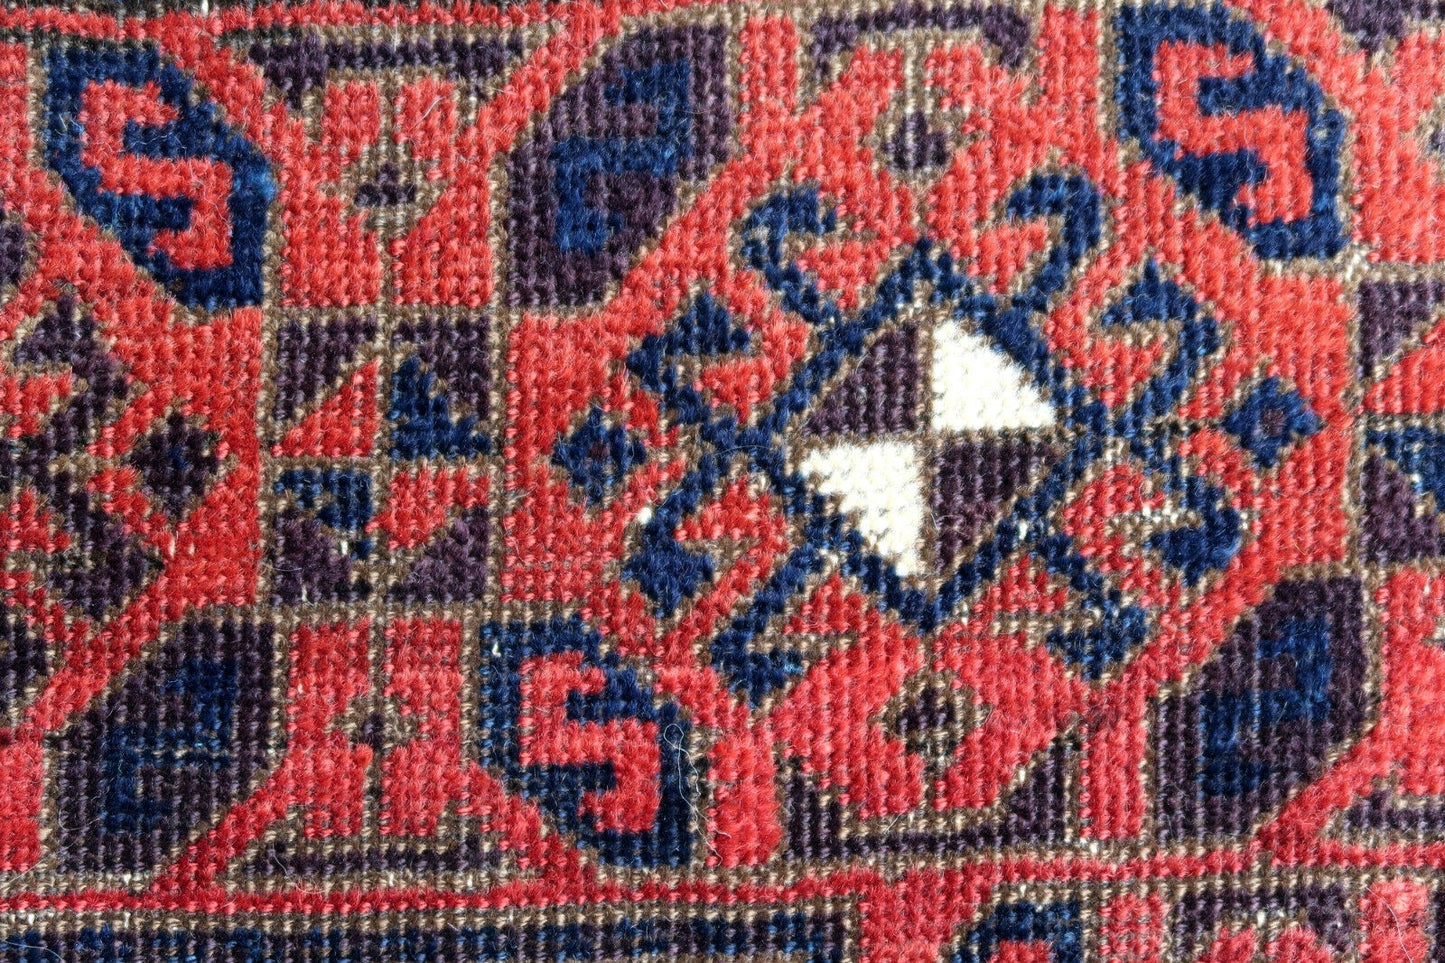 Handmade antique Afghan Baluch rug 3.3' x 5.6' (100cm x 170cm) 1900s - 1P77